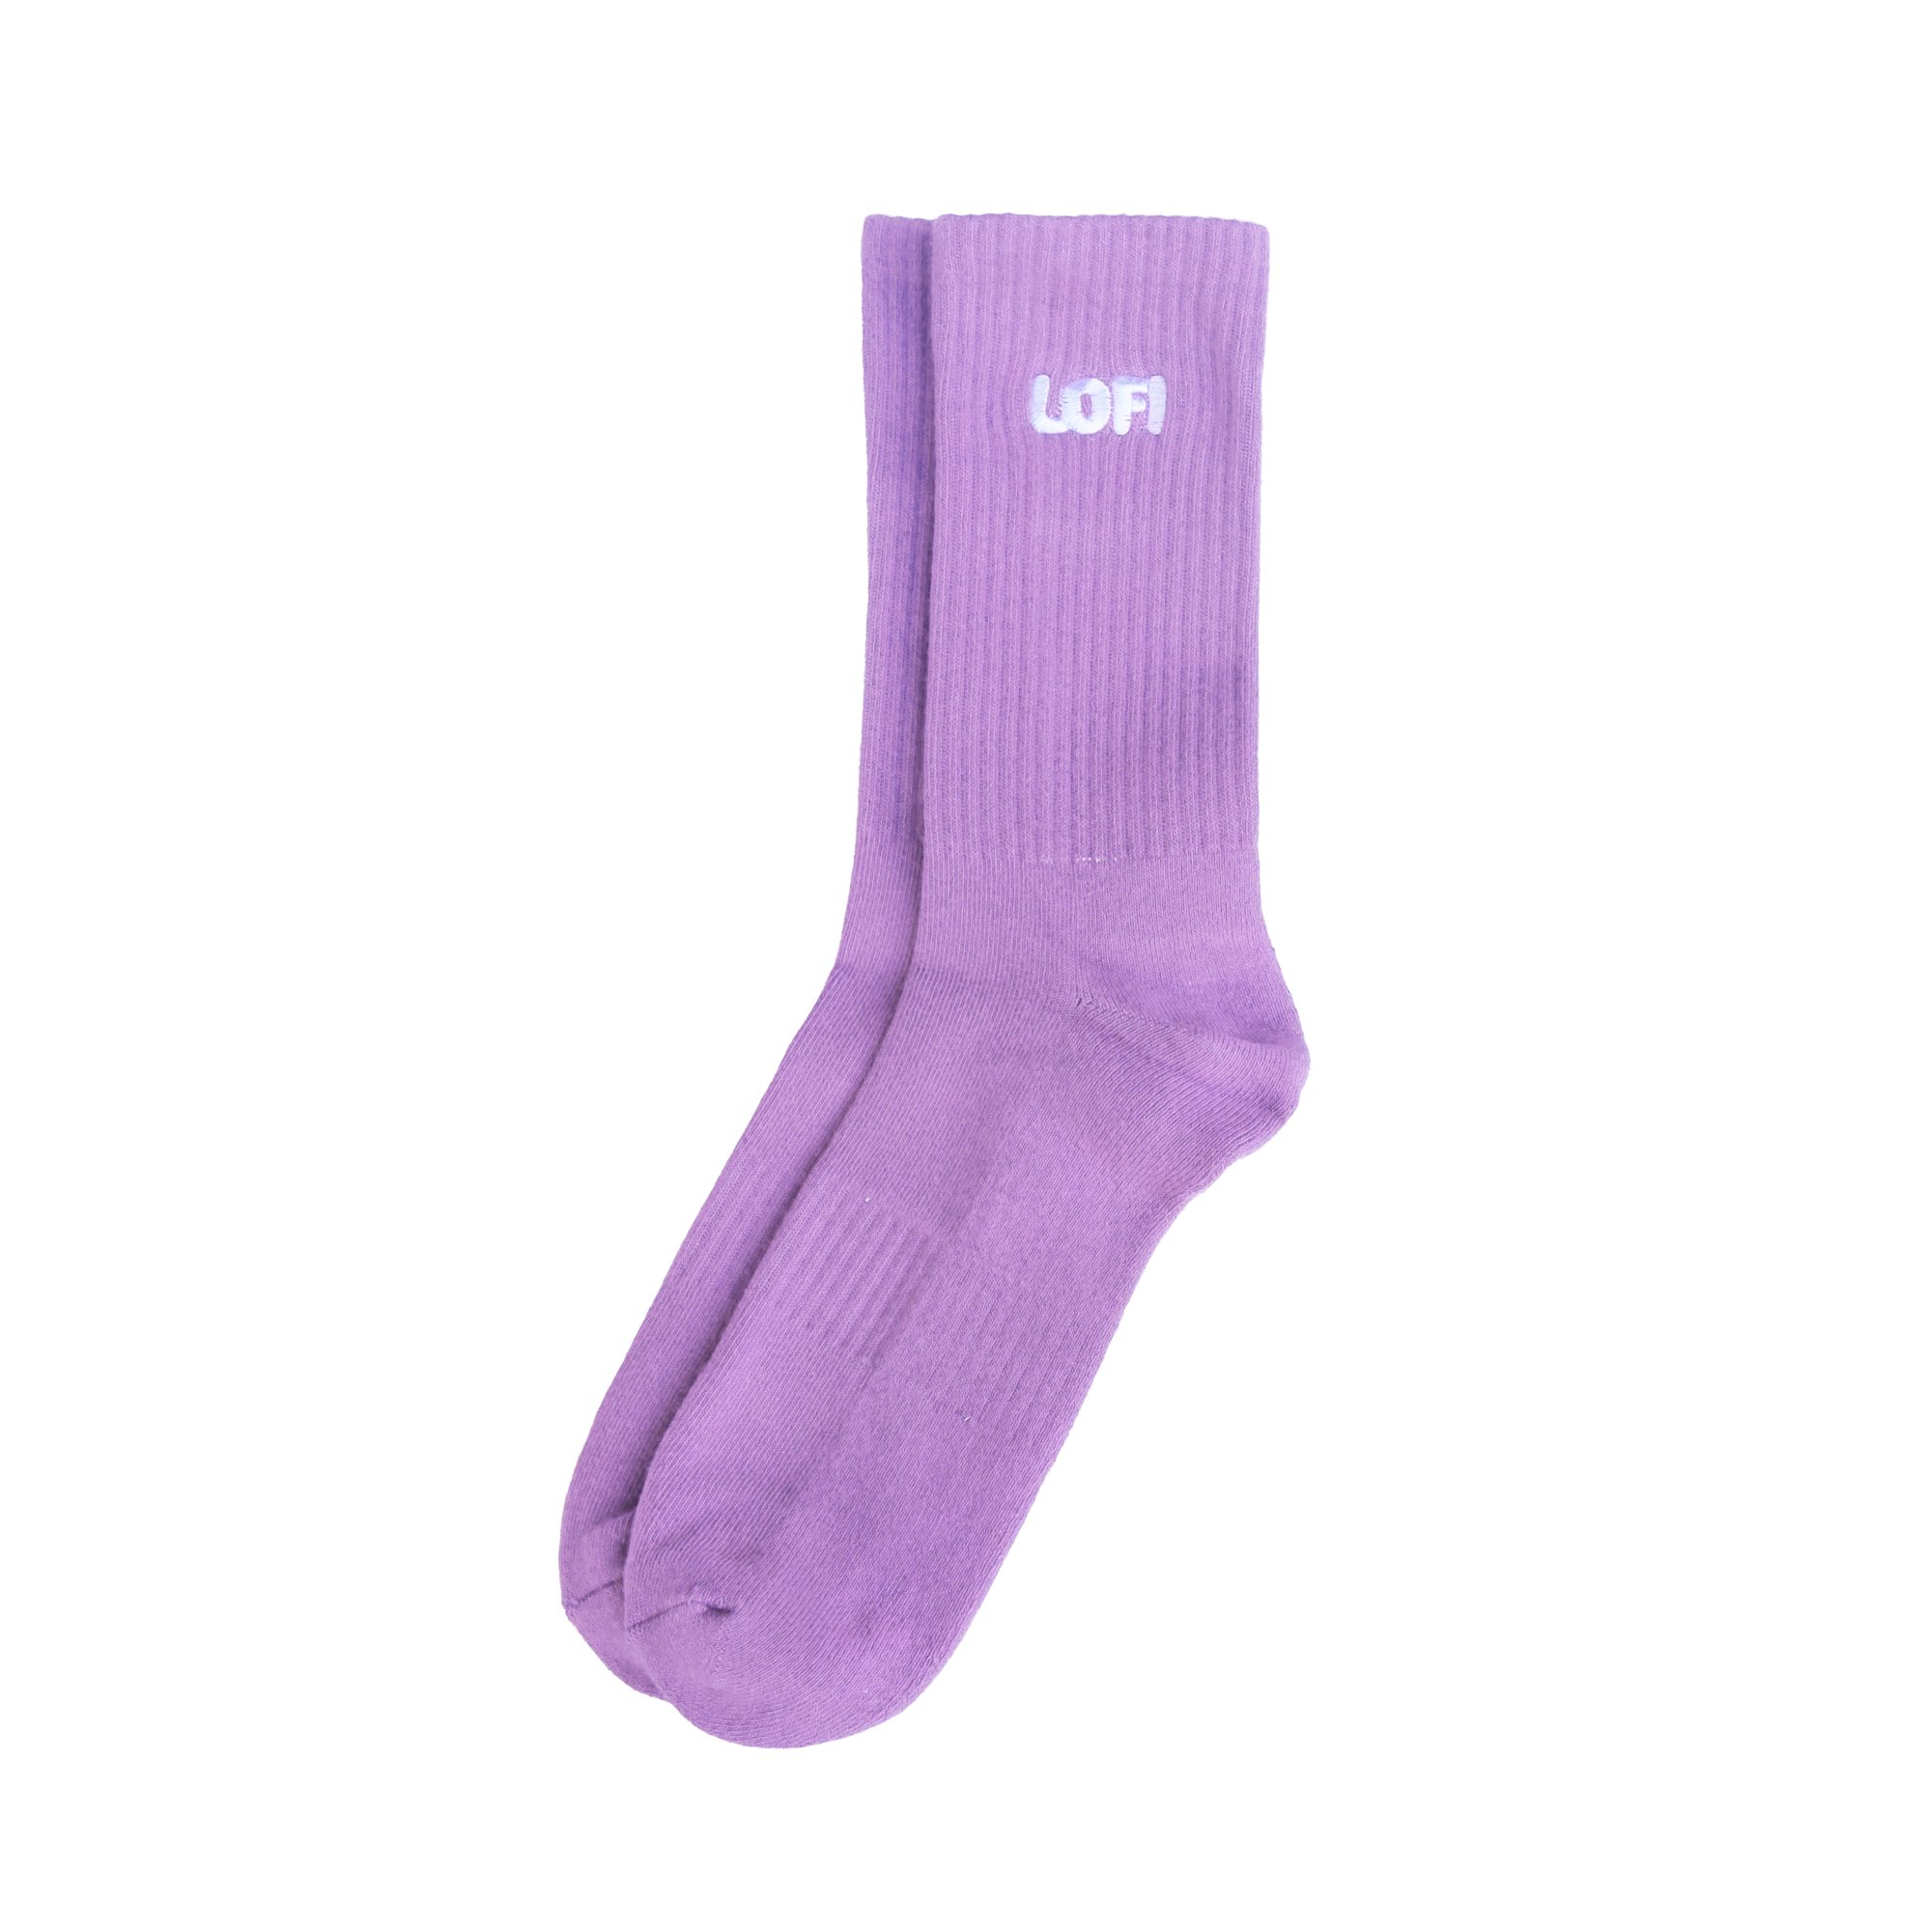 Lo-Fi<br>Dyed Socks<br>